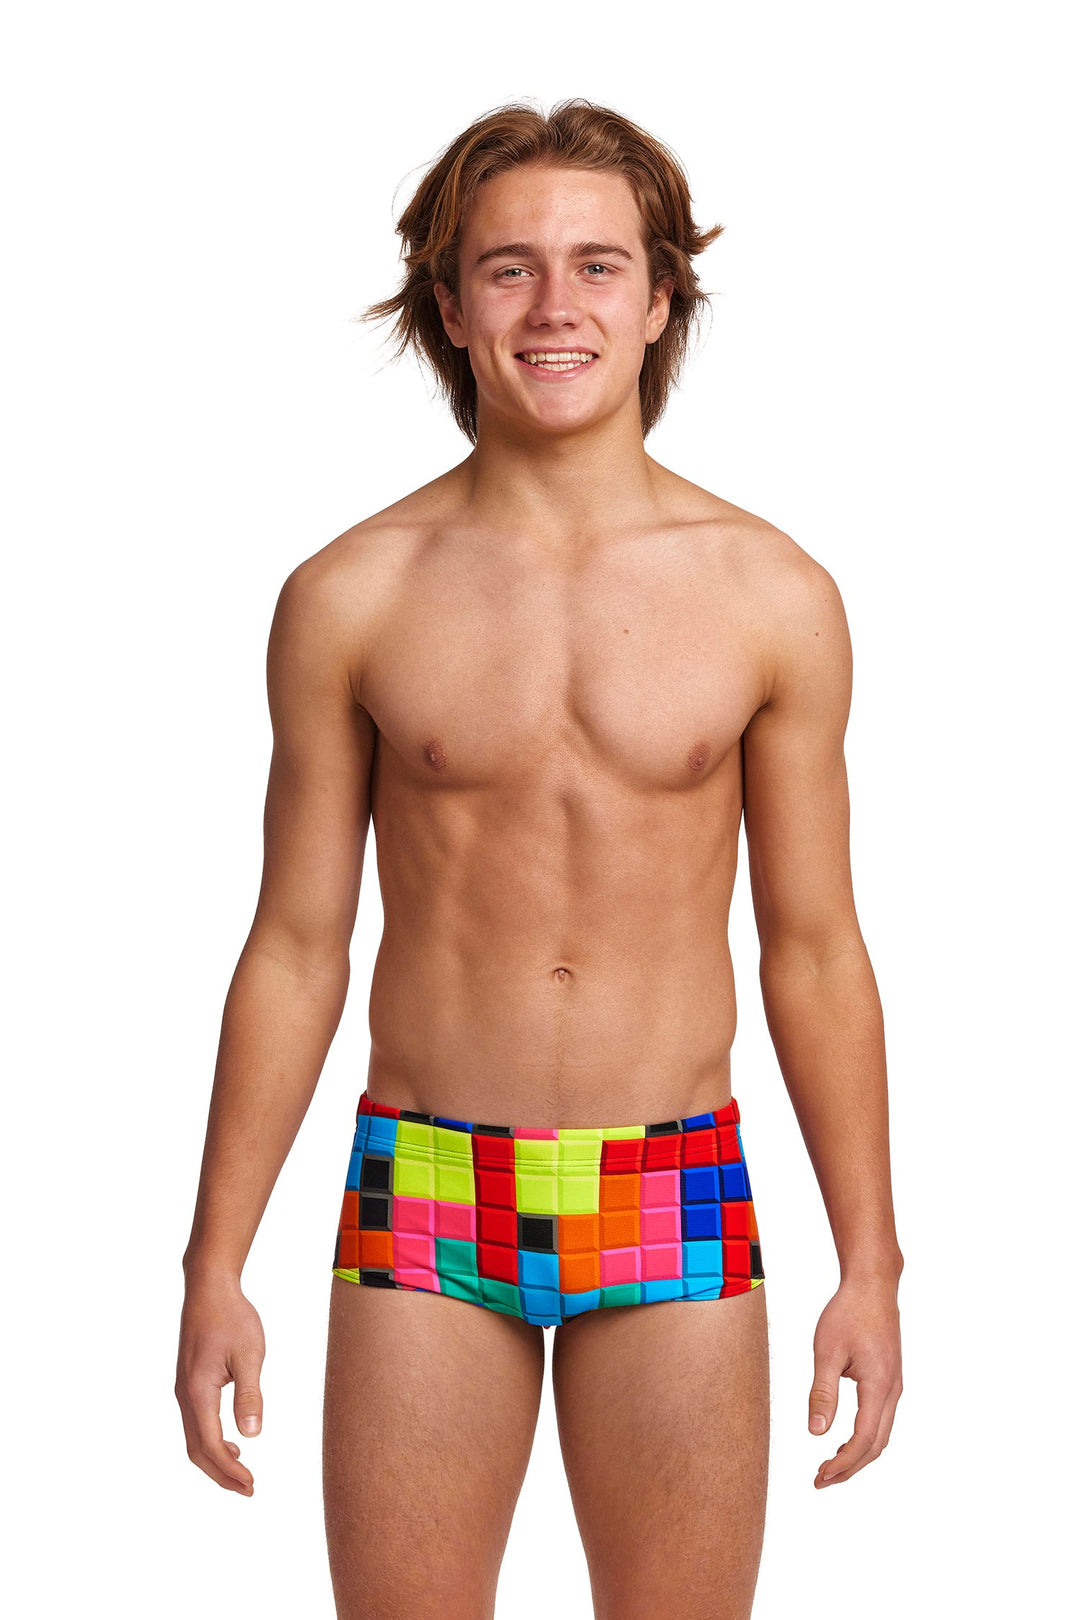 Blocked Sidewinder Trunks Swimsuit FTS010B - Boys